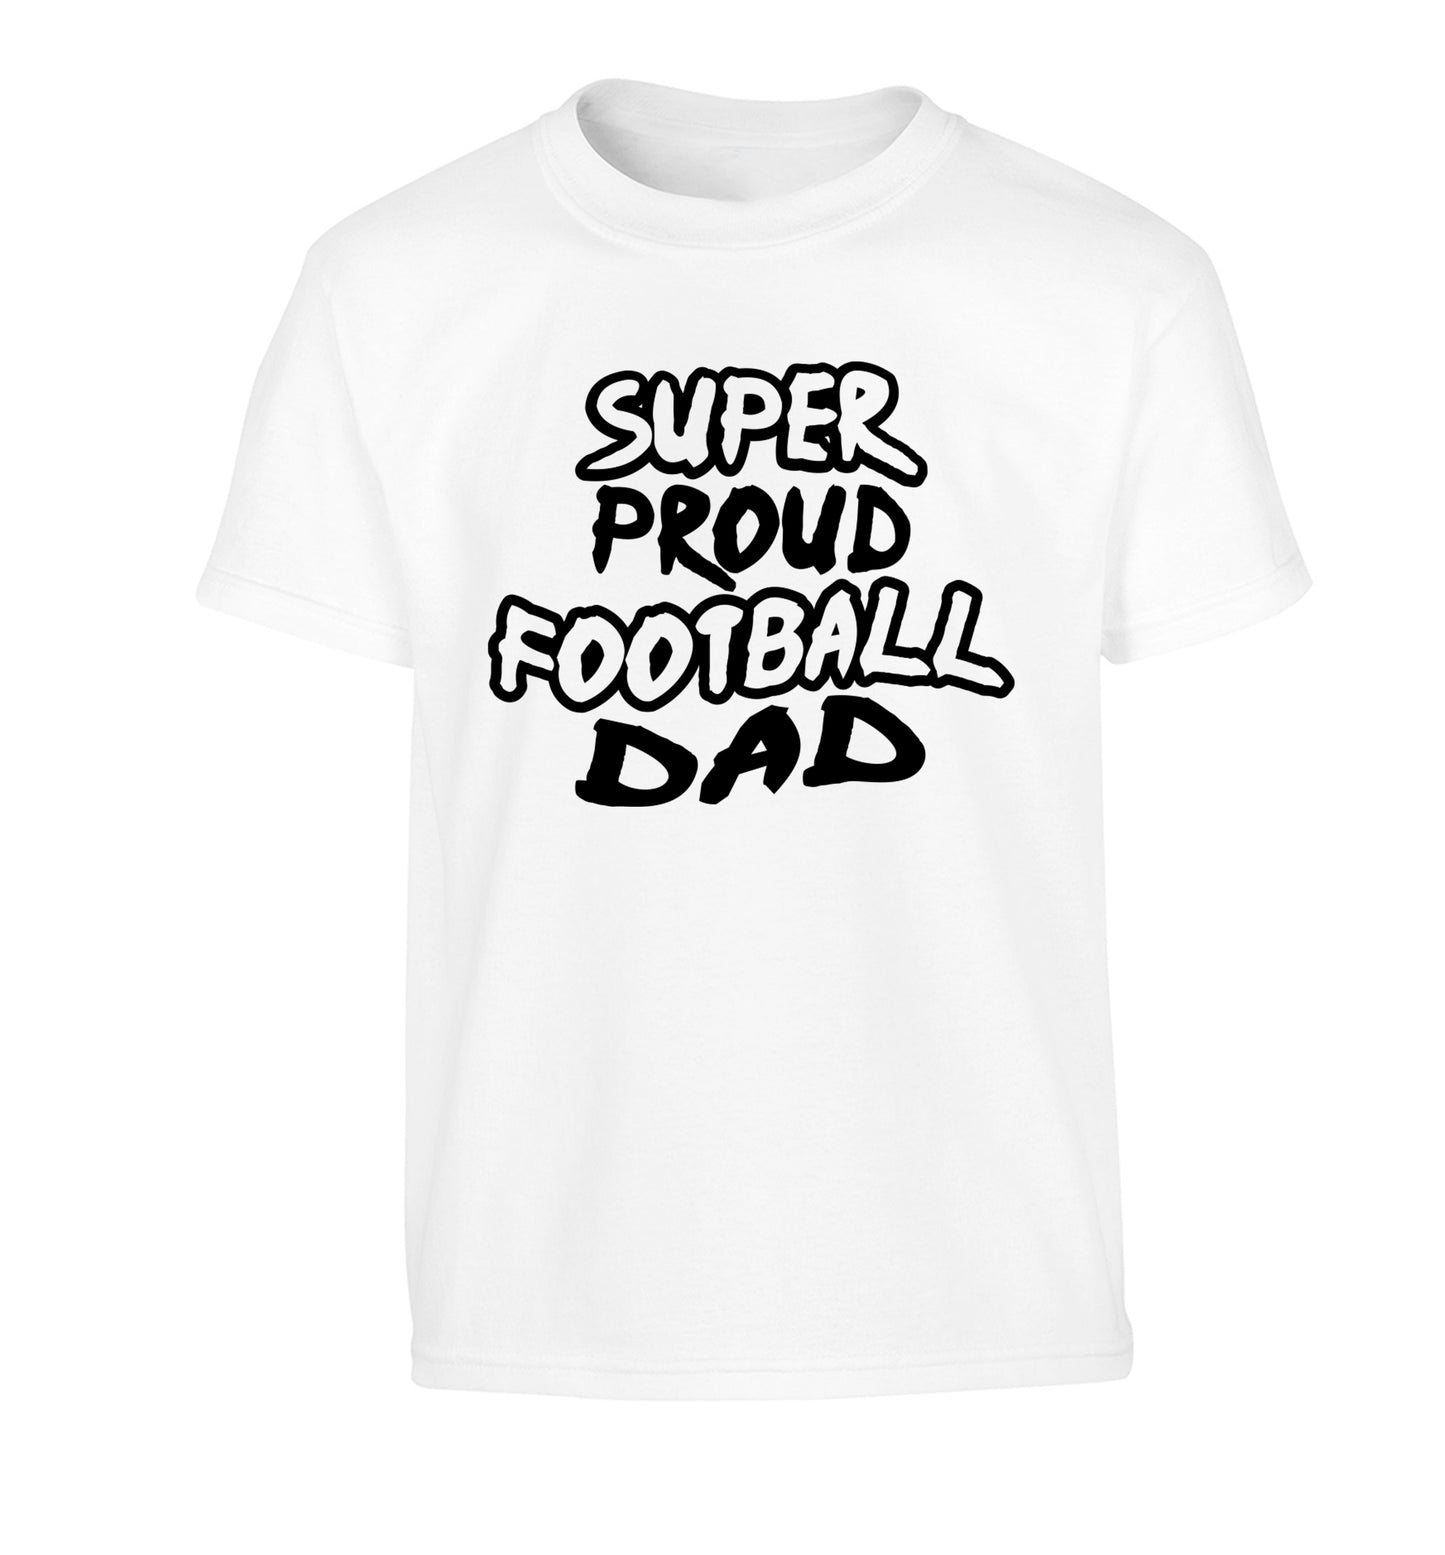 Super proud football dad Children's white Tshirt 12-14 Years